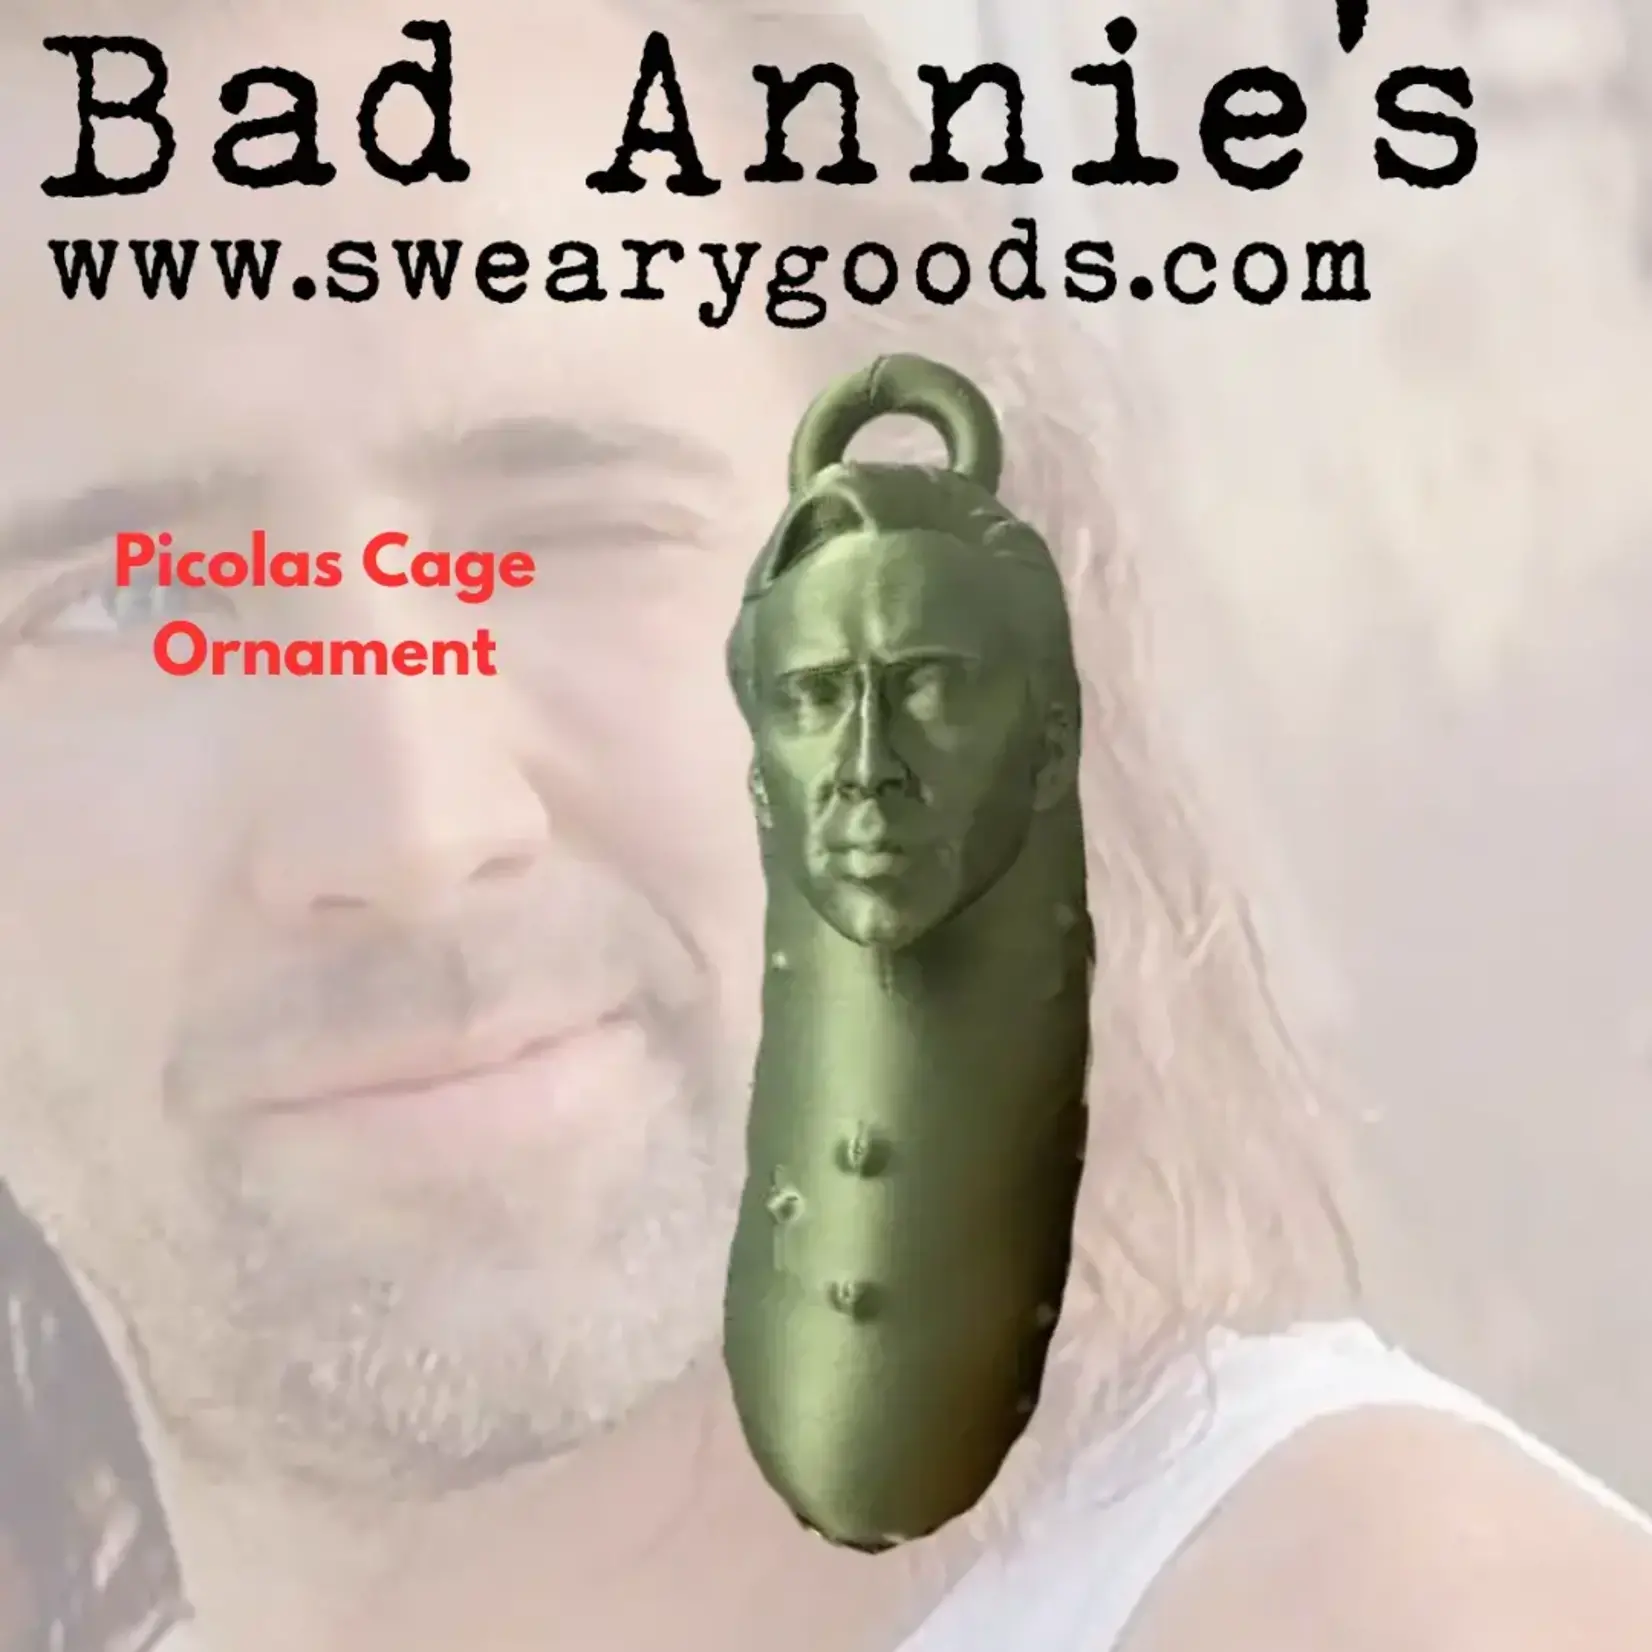 Ornament - Picolas Cage (Nicholas Cage's Face On Pickle)